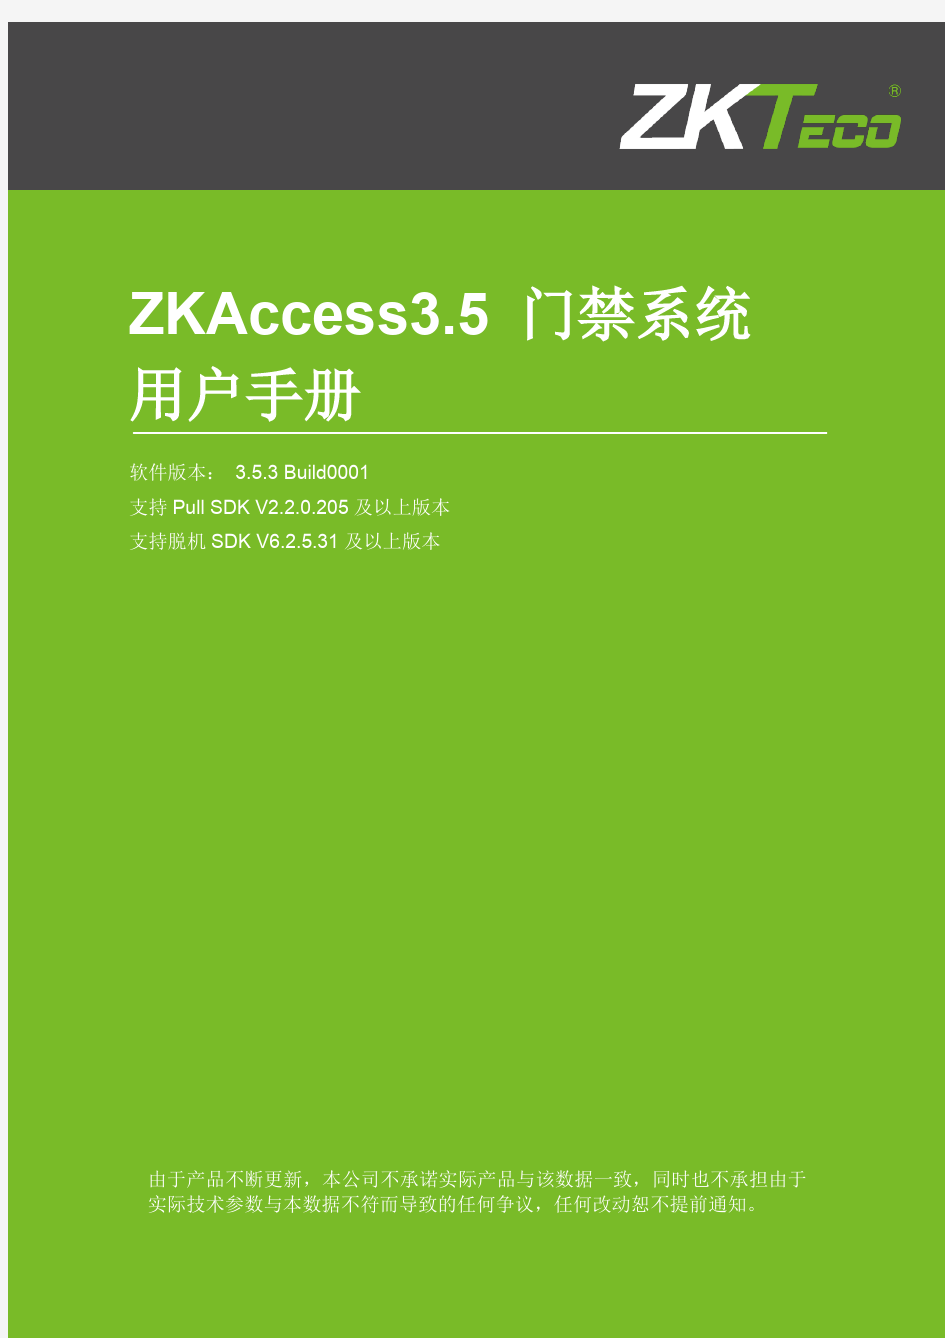 ZKAccess3.5门禁系统用户手册V2.2.1